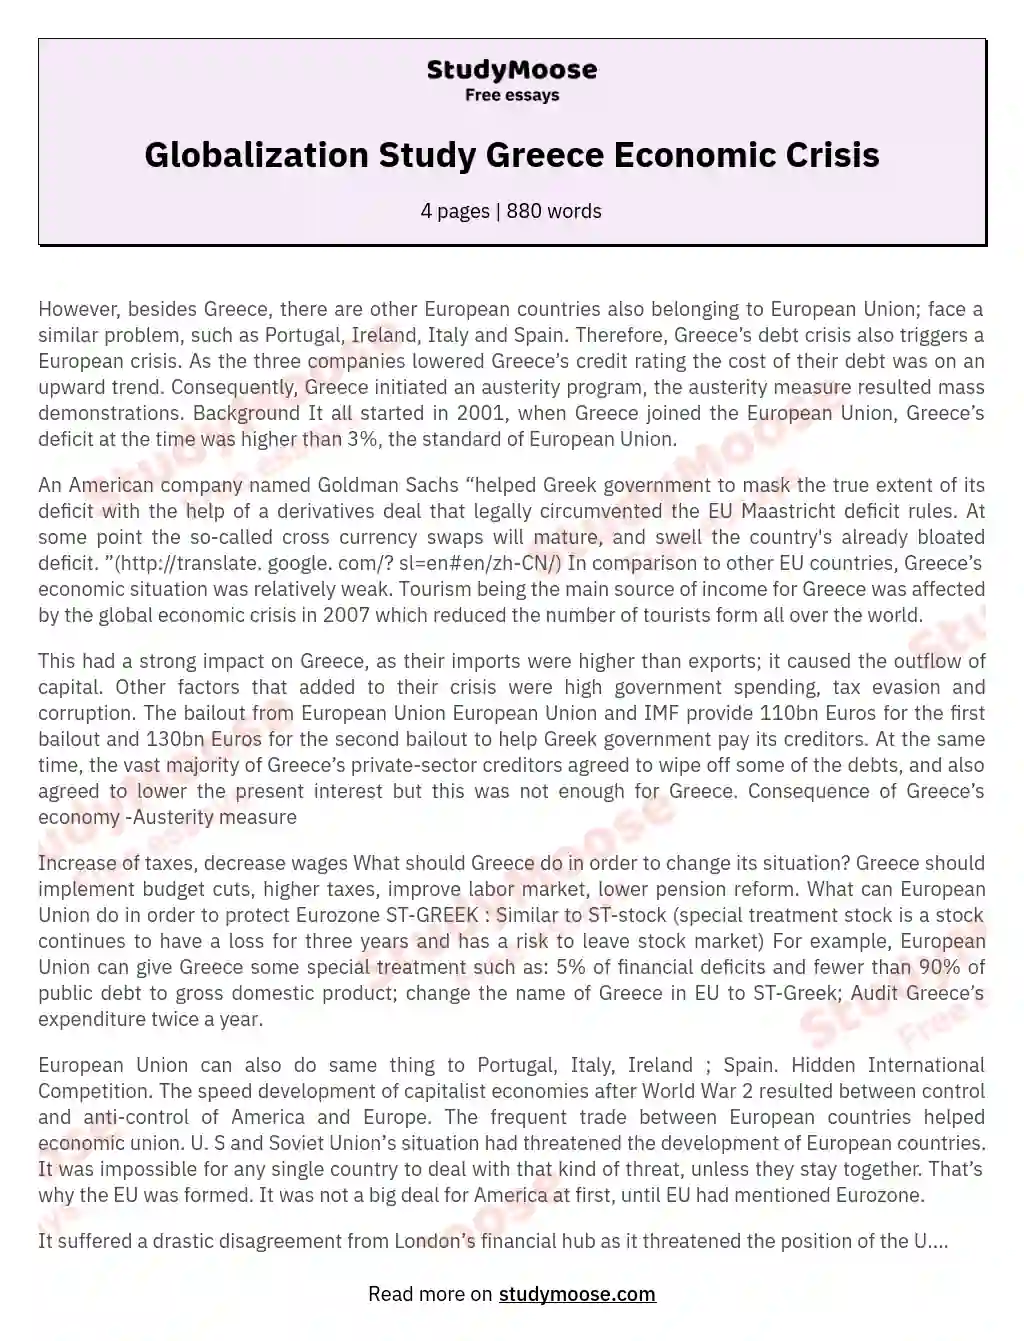 Globalization Study Greece Economic Crisis essay